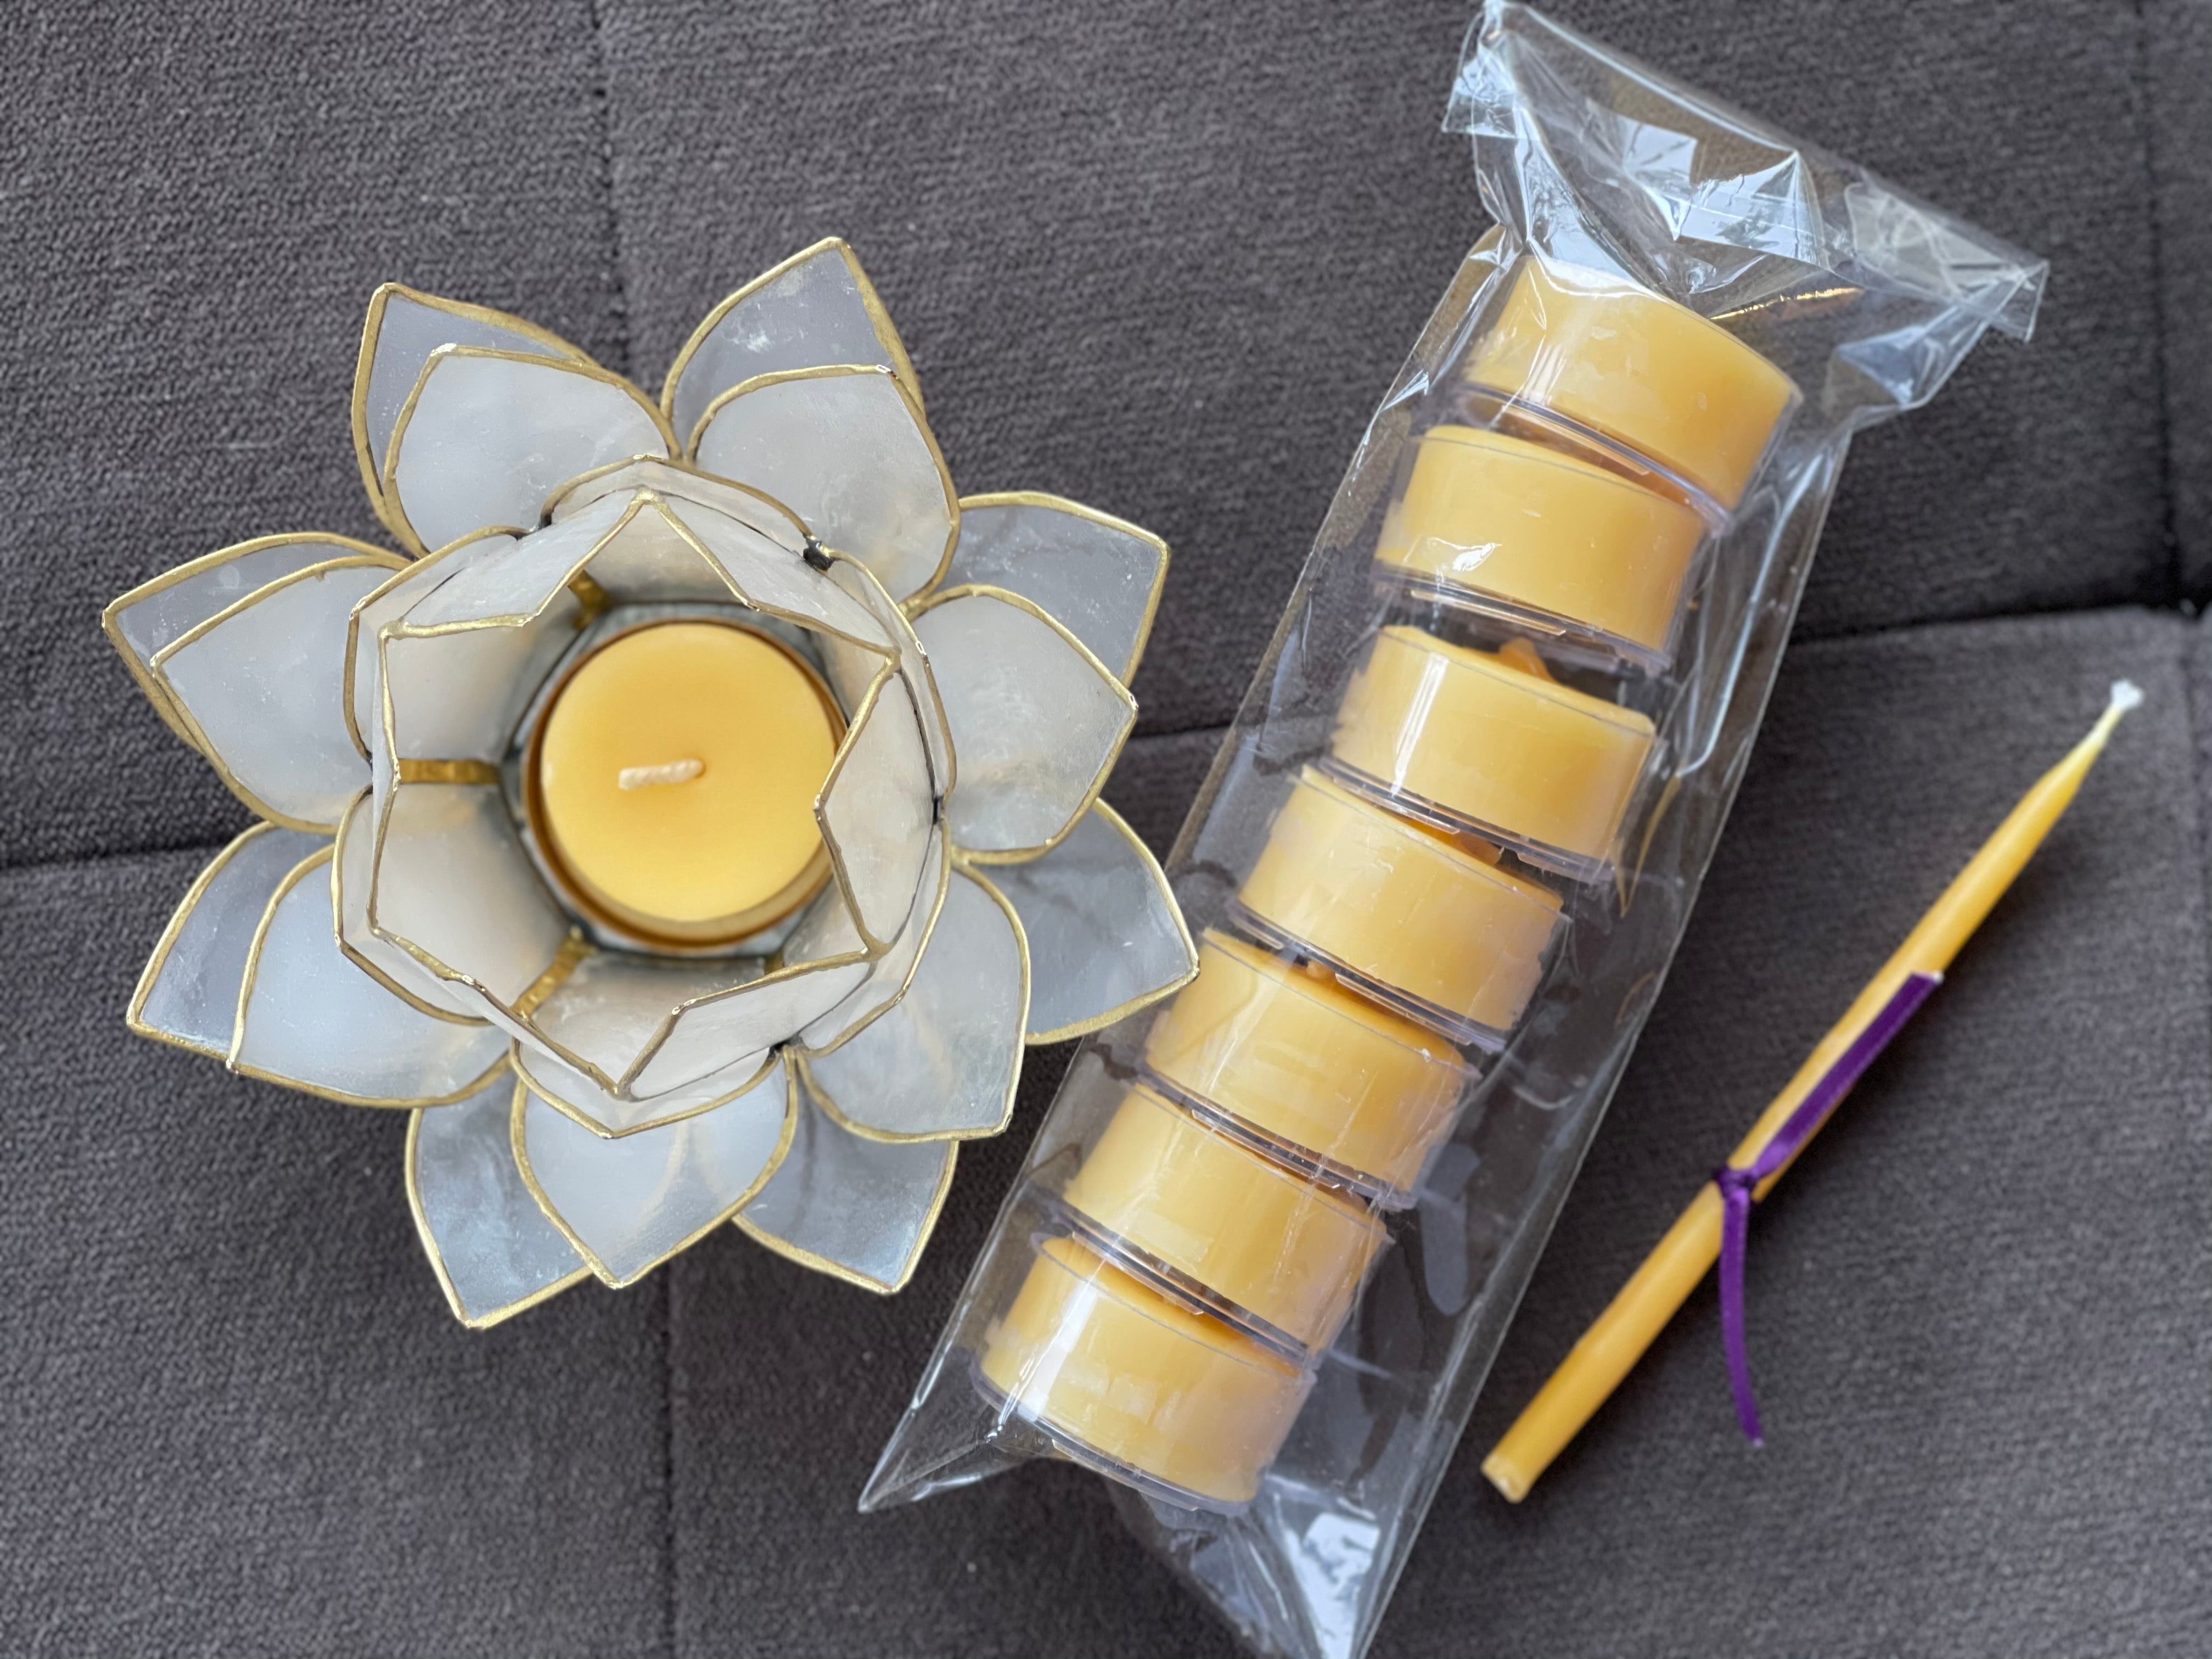 New Stock! Translucent Flora Tealight Holder, 7 Tealights, Candle Lighter Gift Set